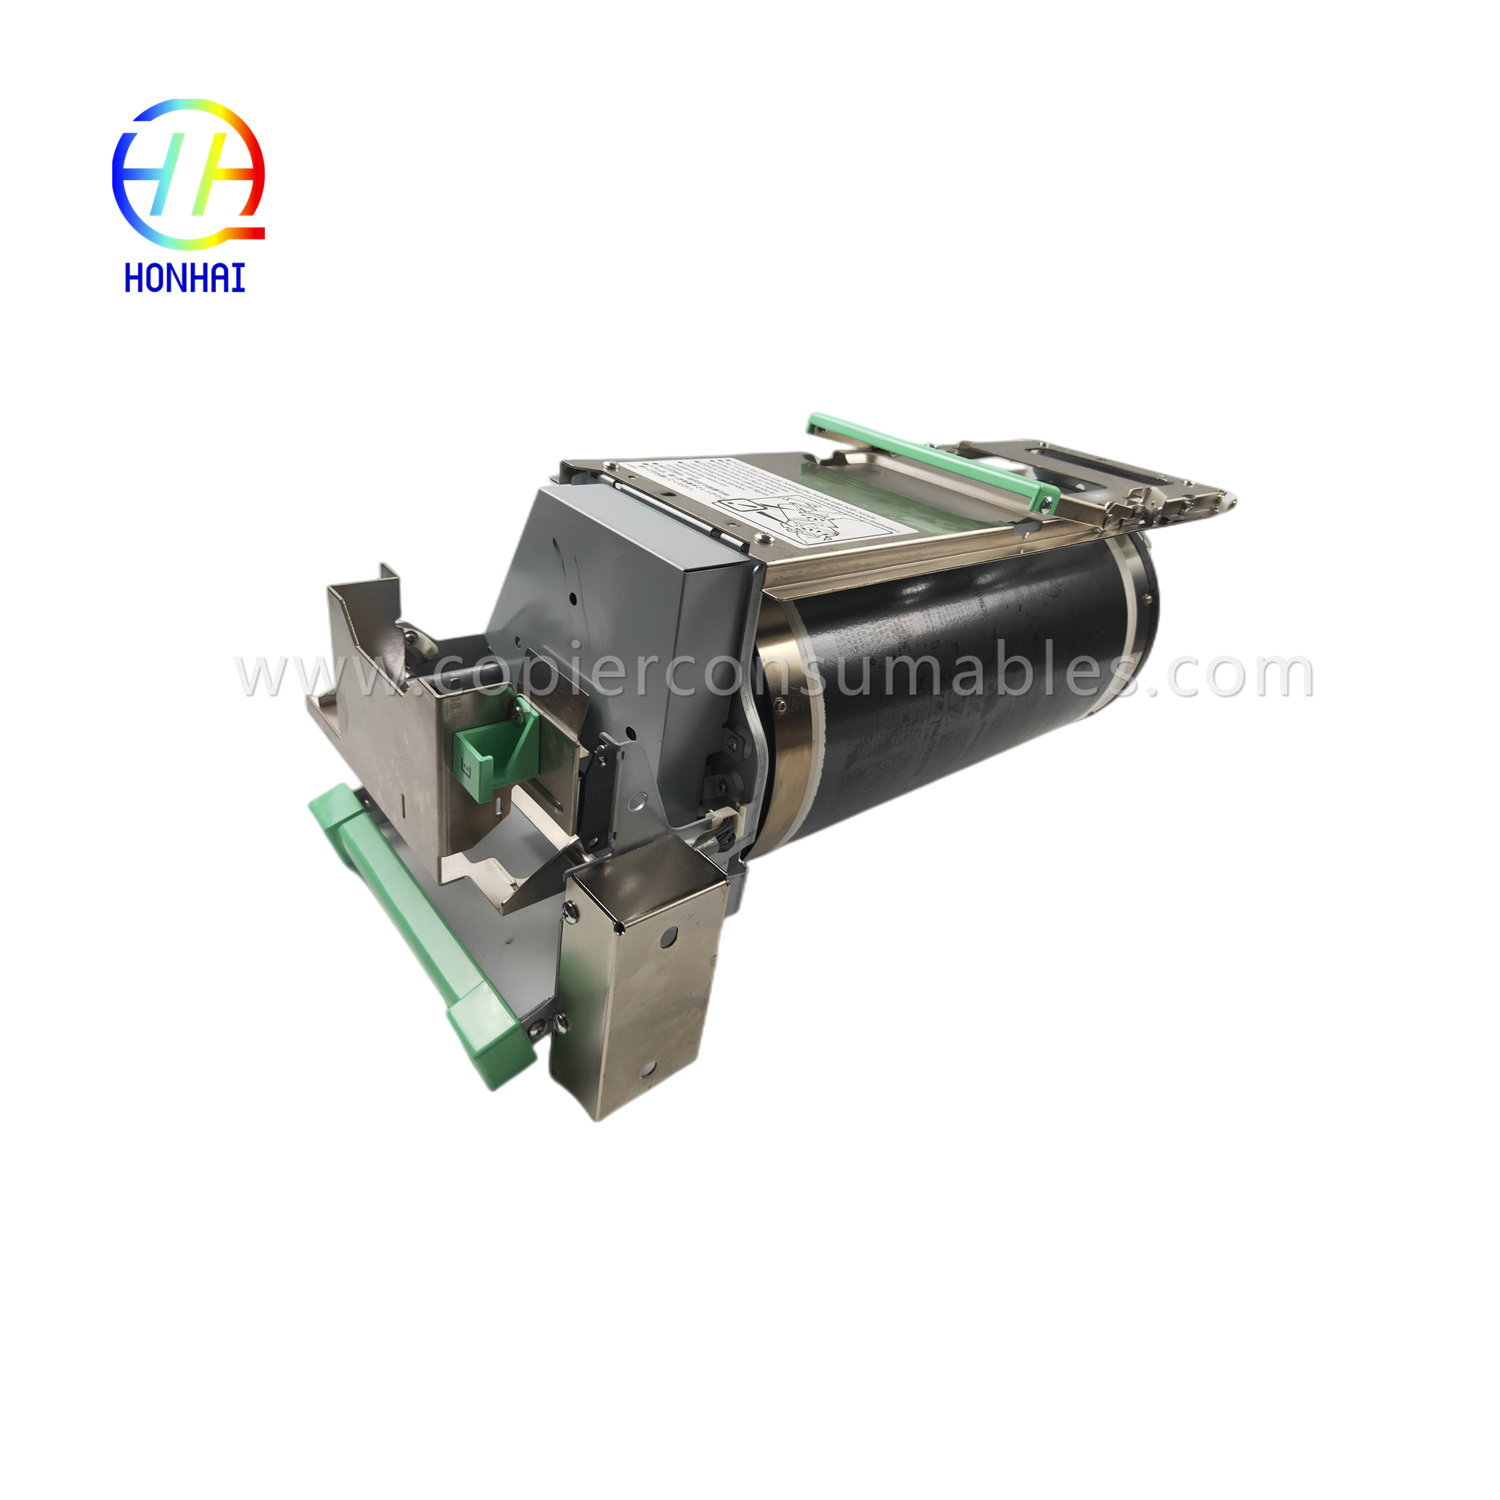 https://www.copierconsumables.com/digital-copy-printer-roller-for-ricoh-4450-product/